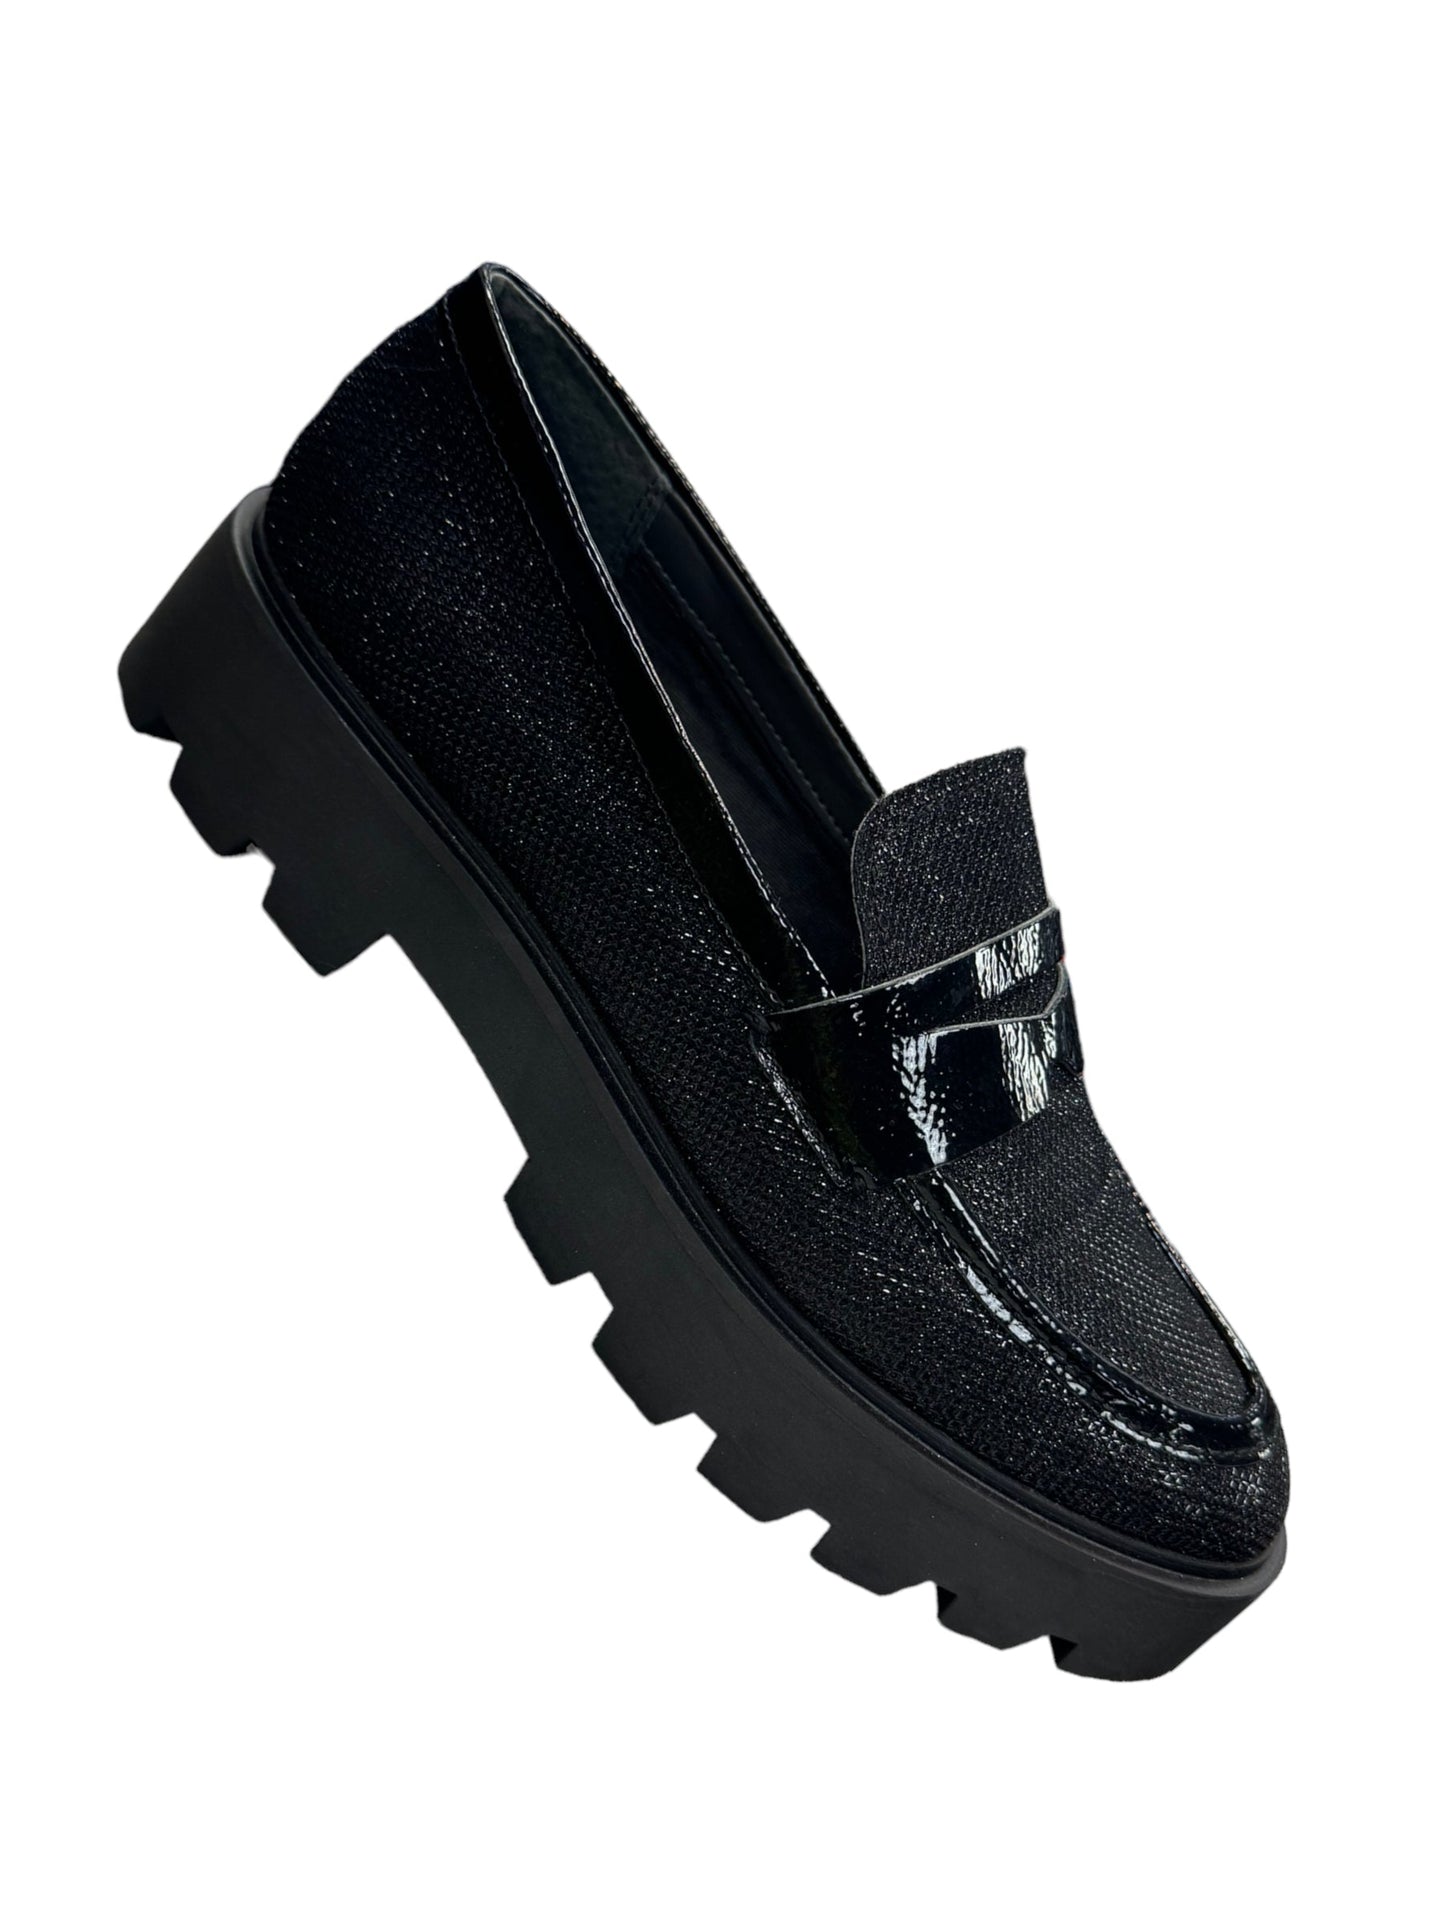 Black Shoes Heels Platform Franco Sarto, Size 8